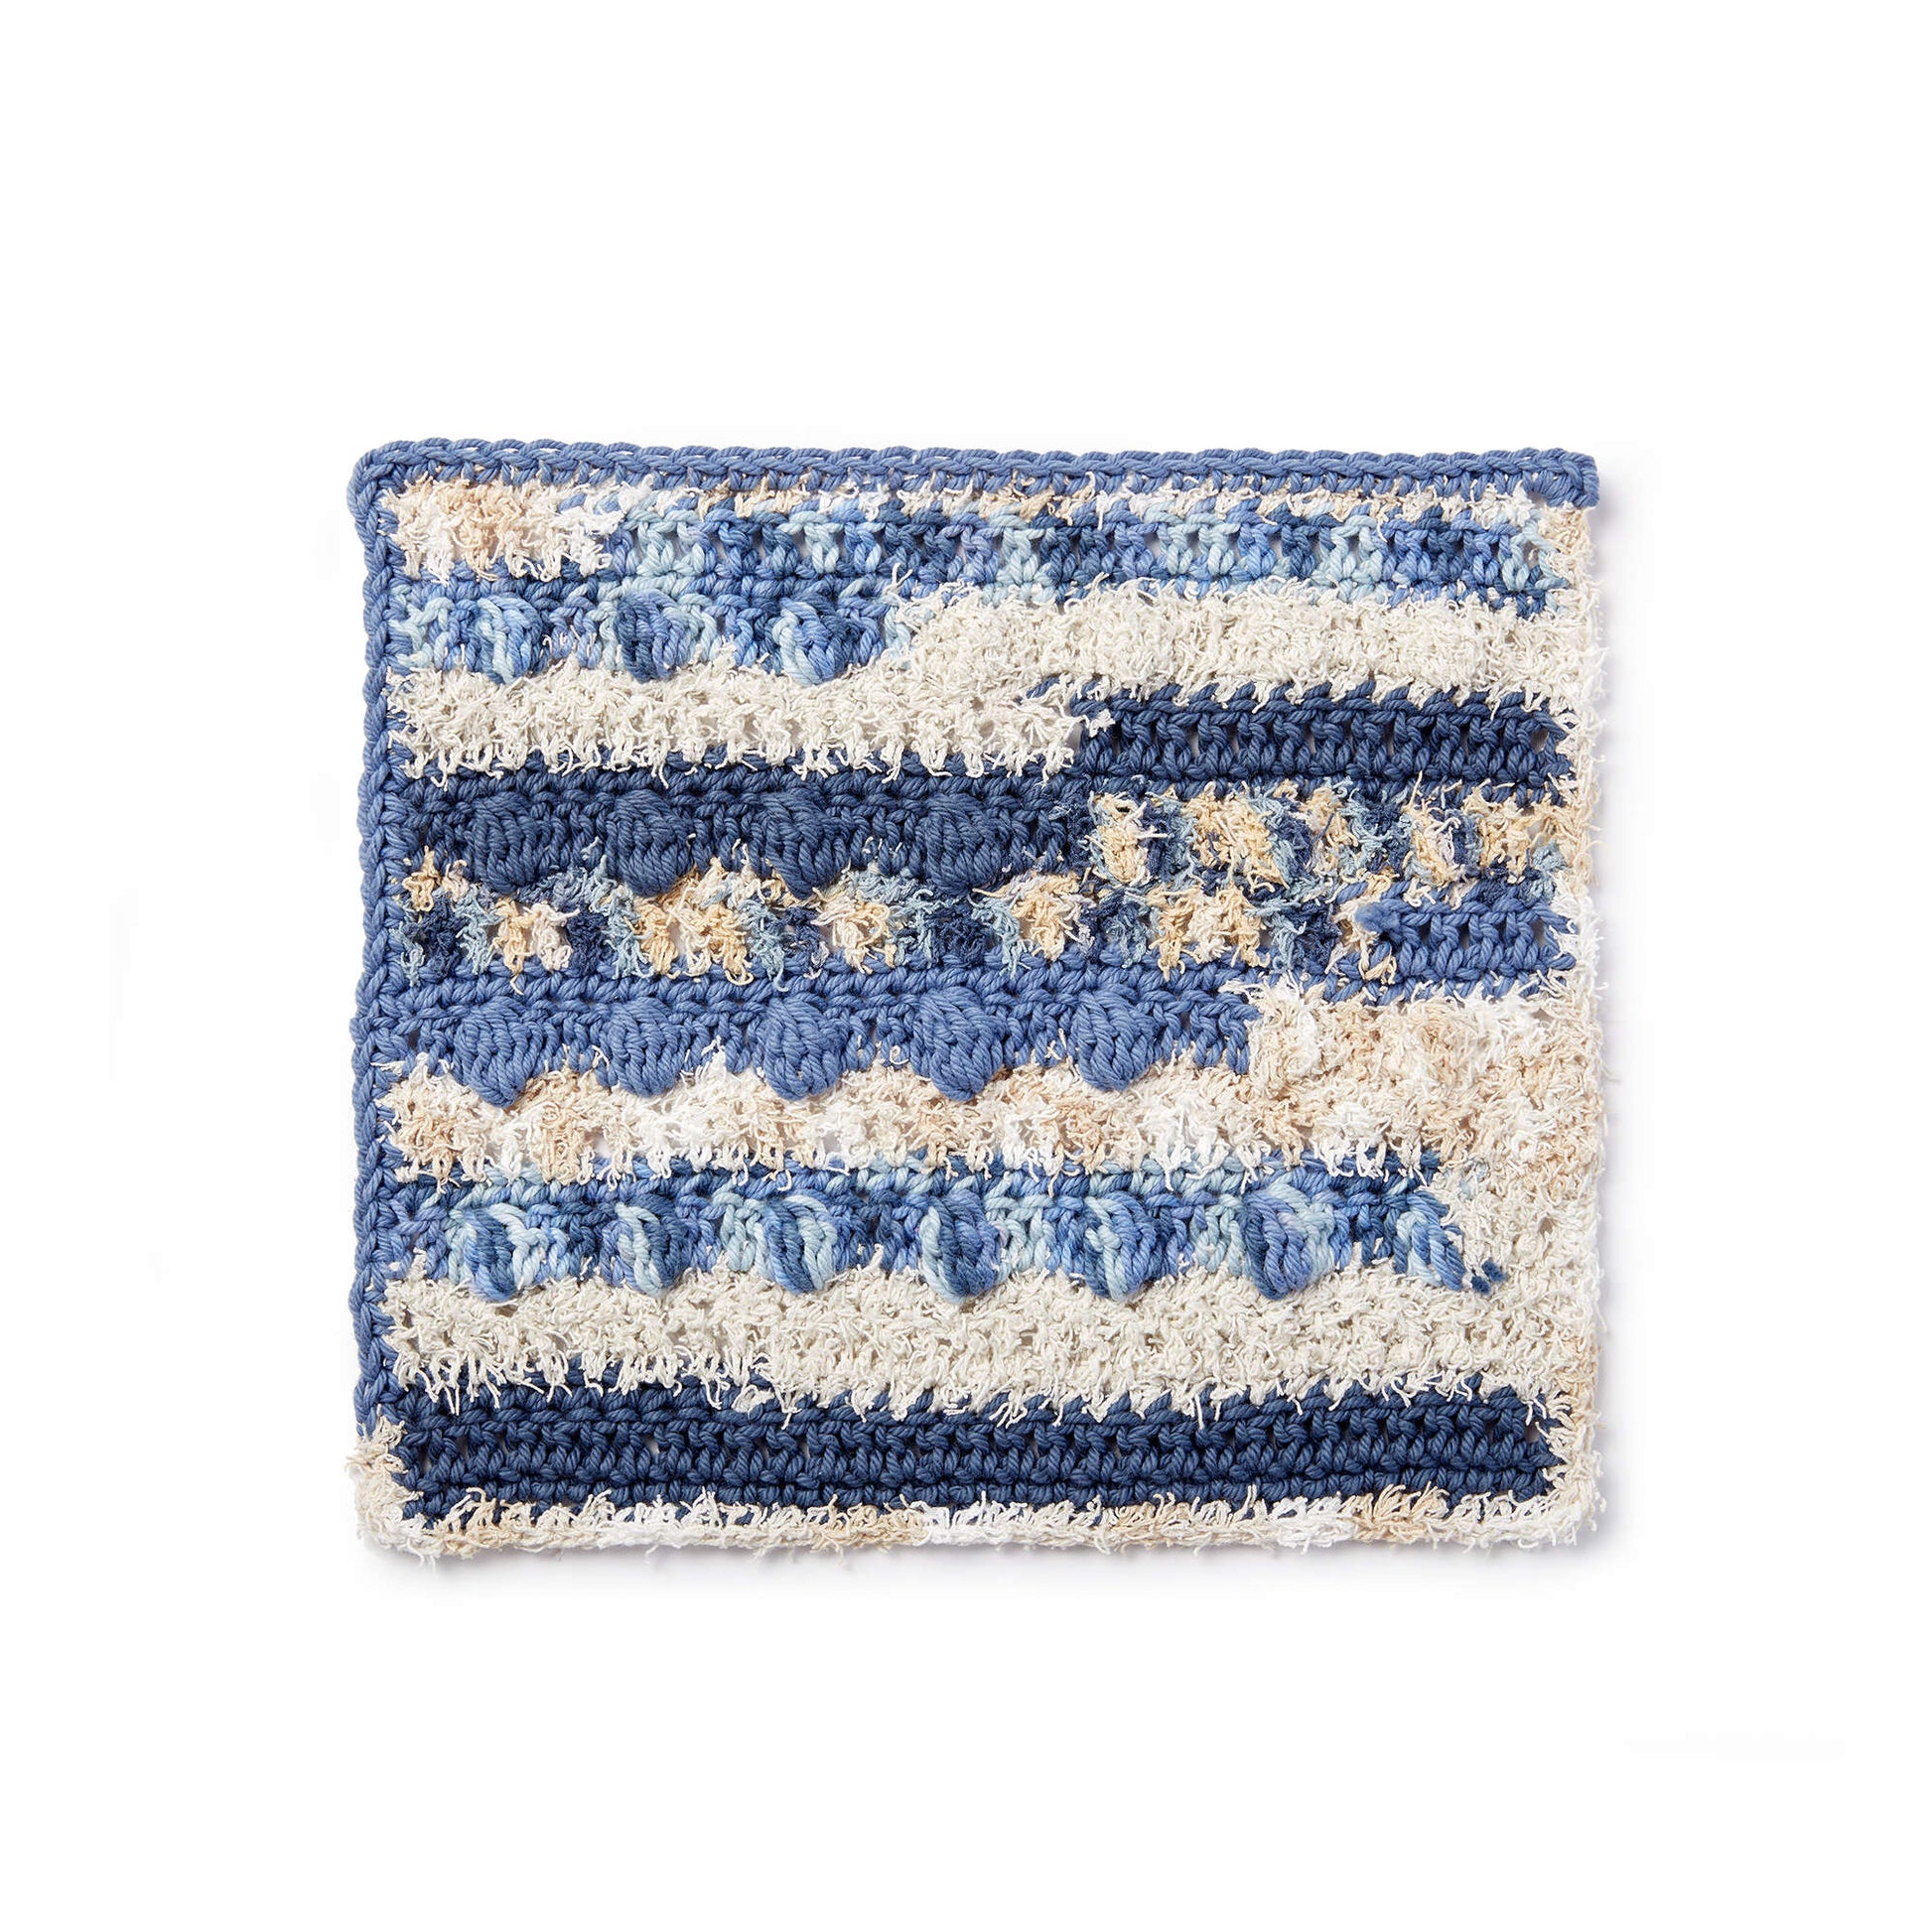 Lily Sugar'n Cream Scrubbing Bobbles Crochet Dishcloth Pattern |  Yarnspirations